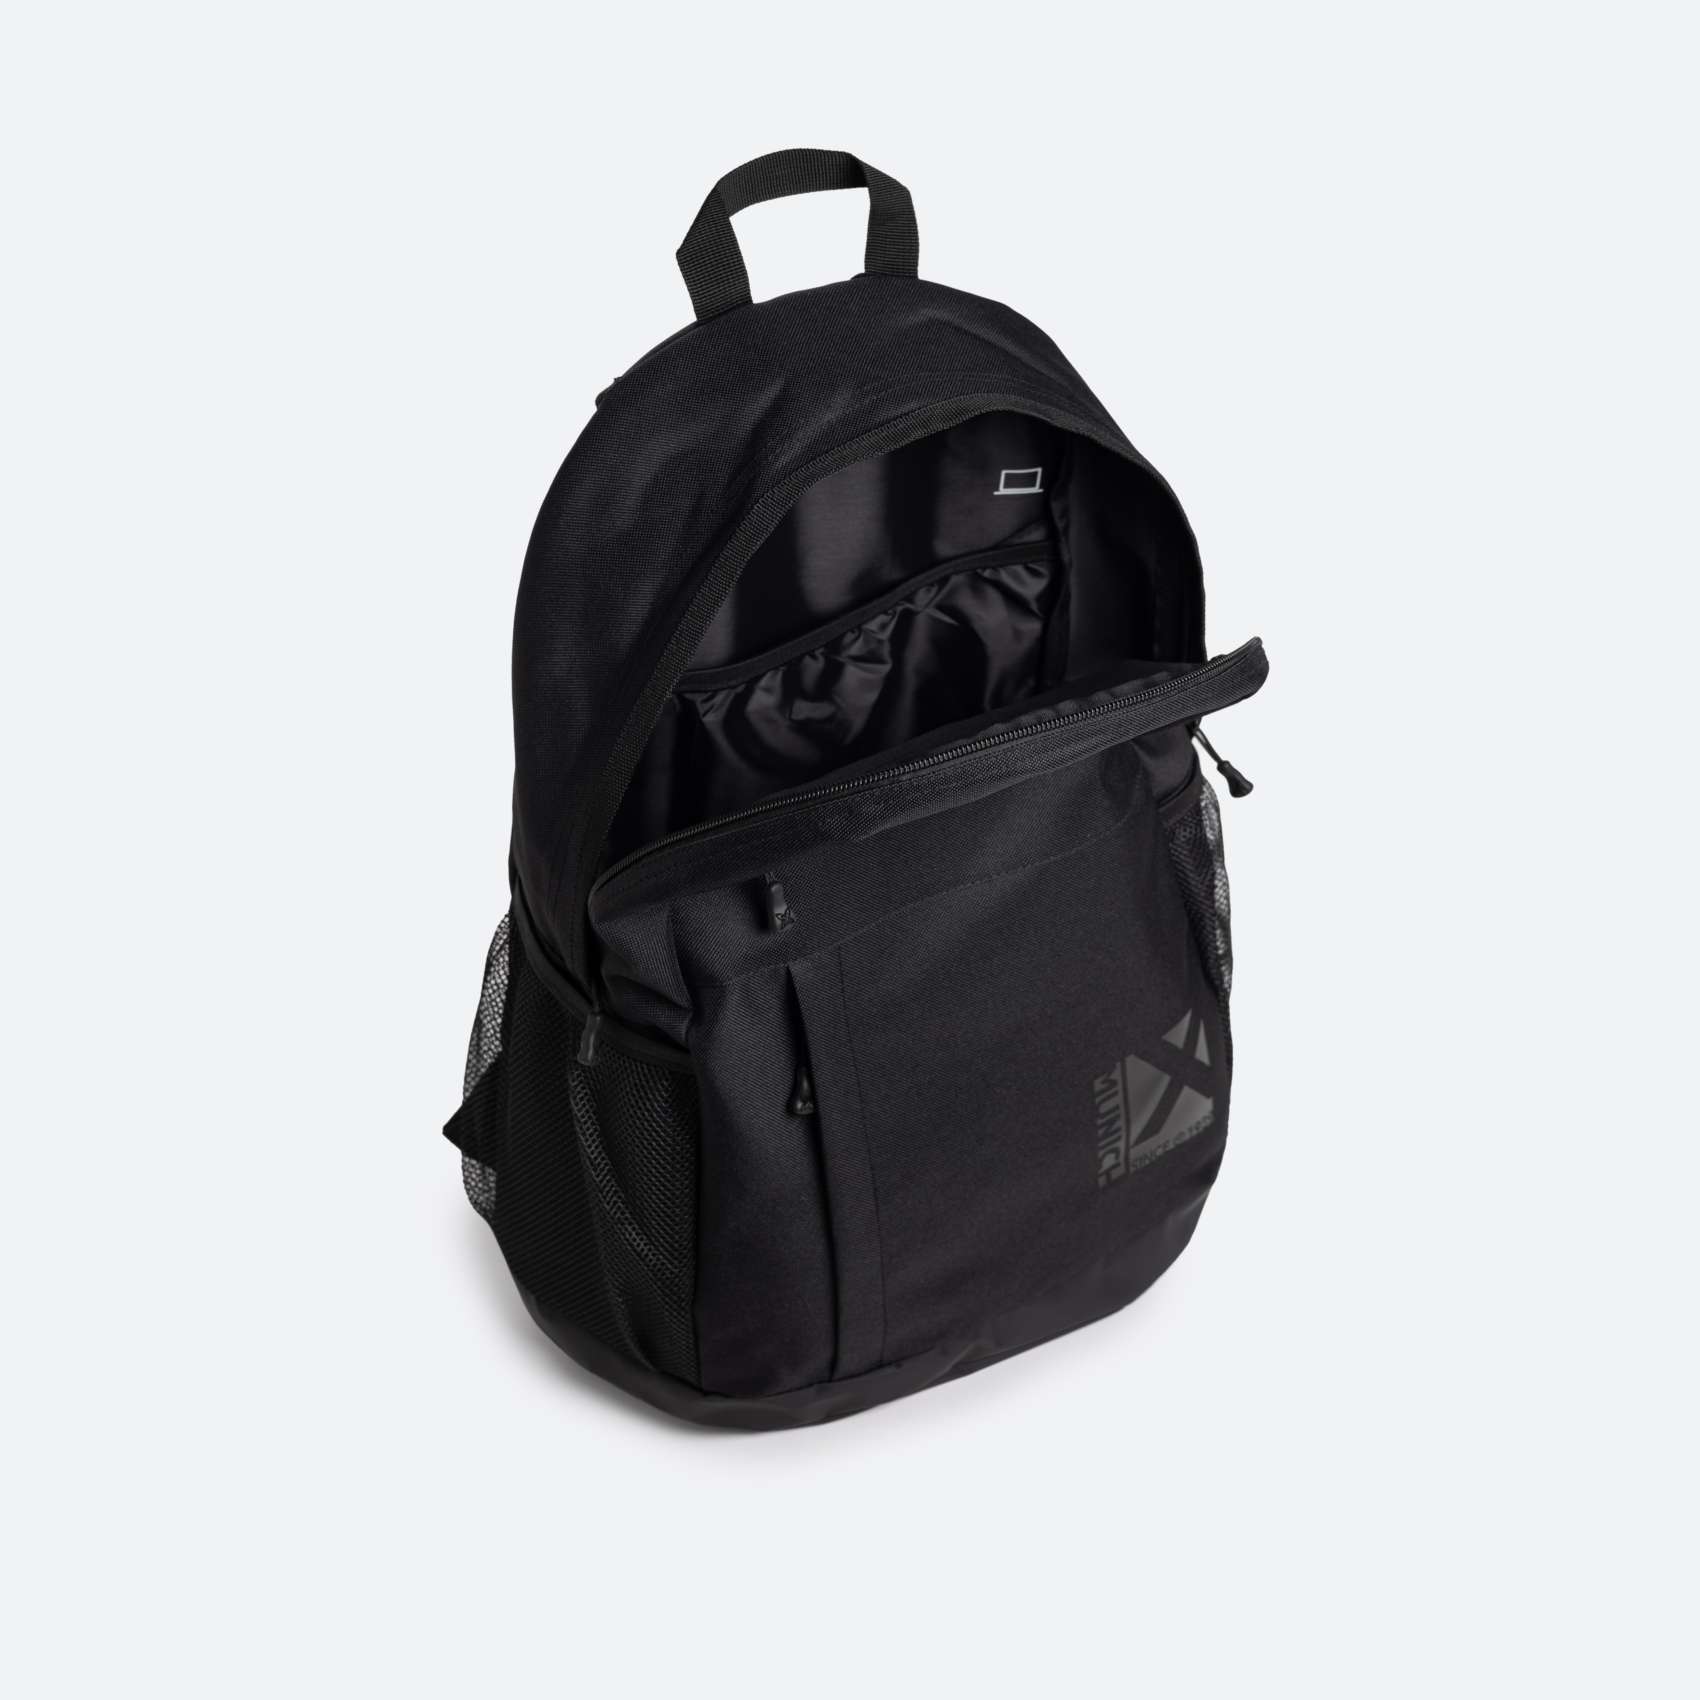 Munich Bags Deep Backpack, mochila Negro Lona